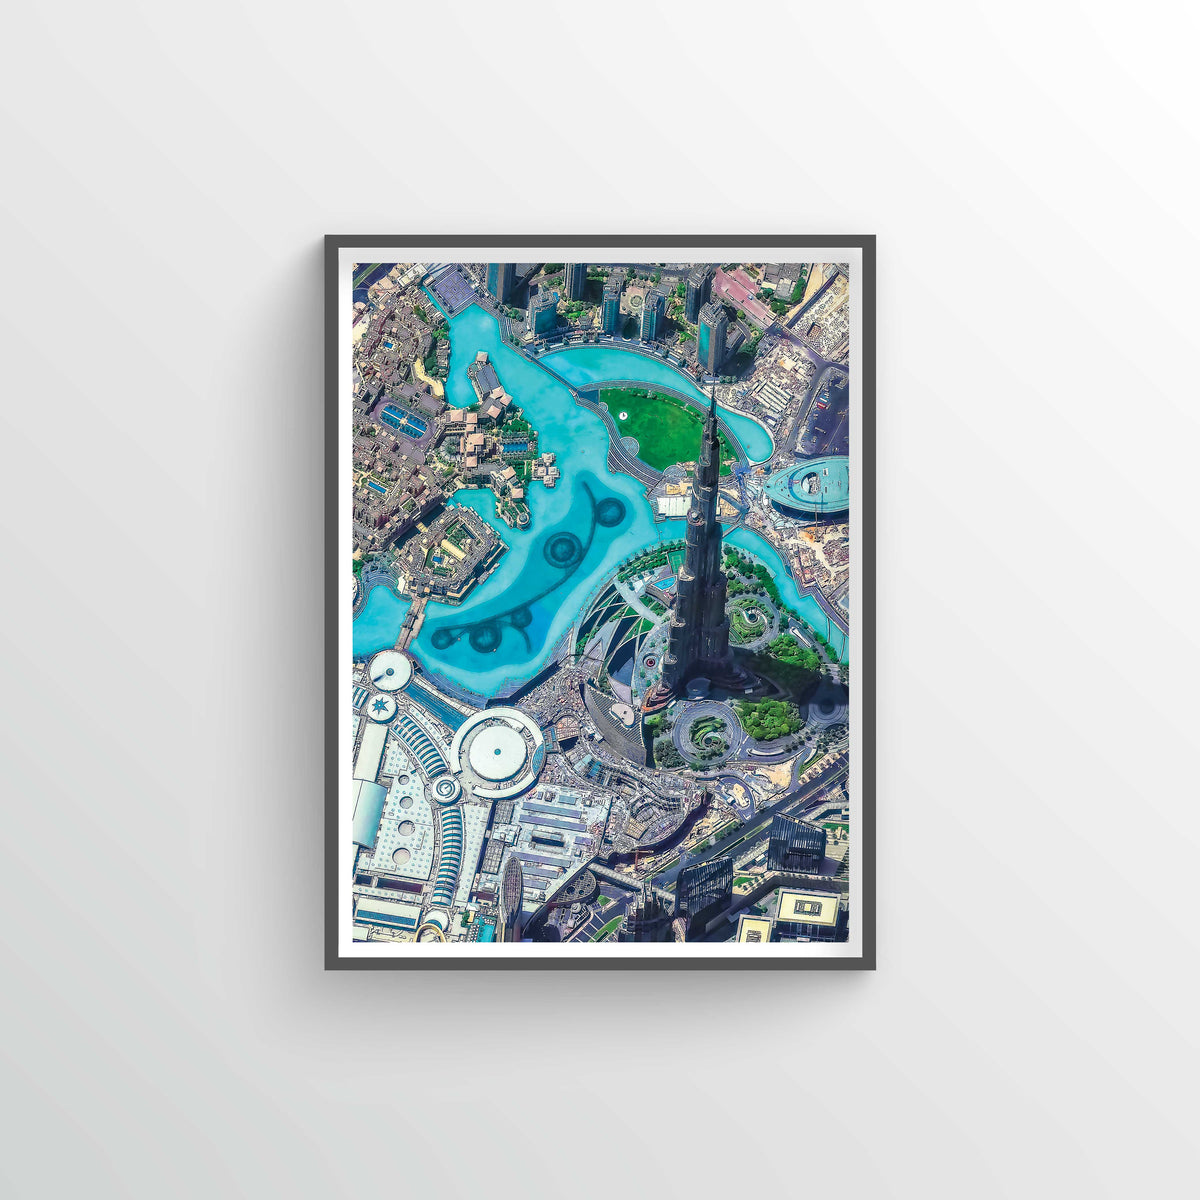 Burj Khalifa Earth Photography - Art Print